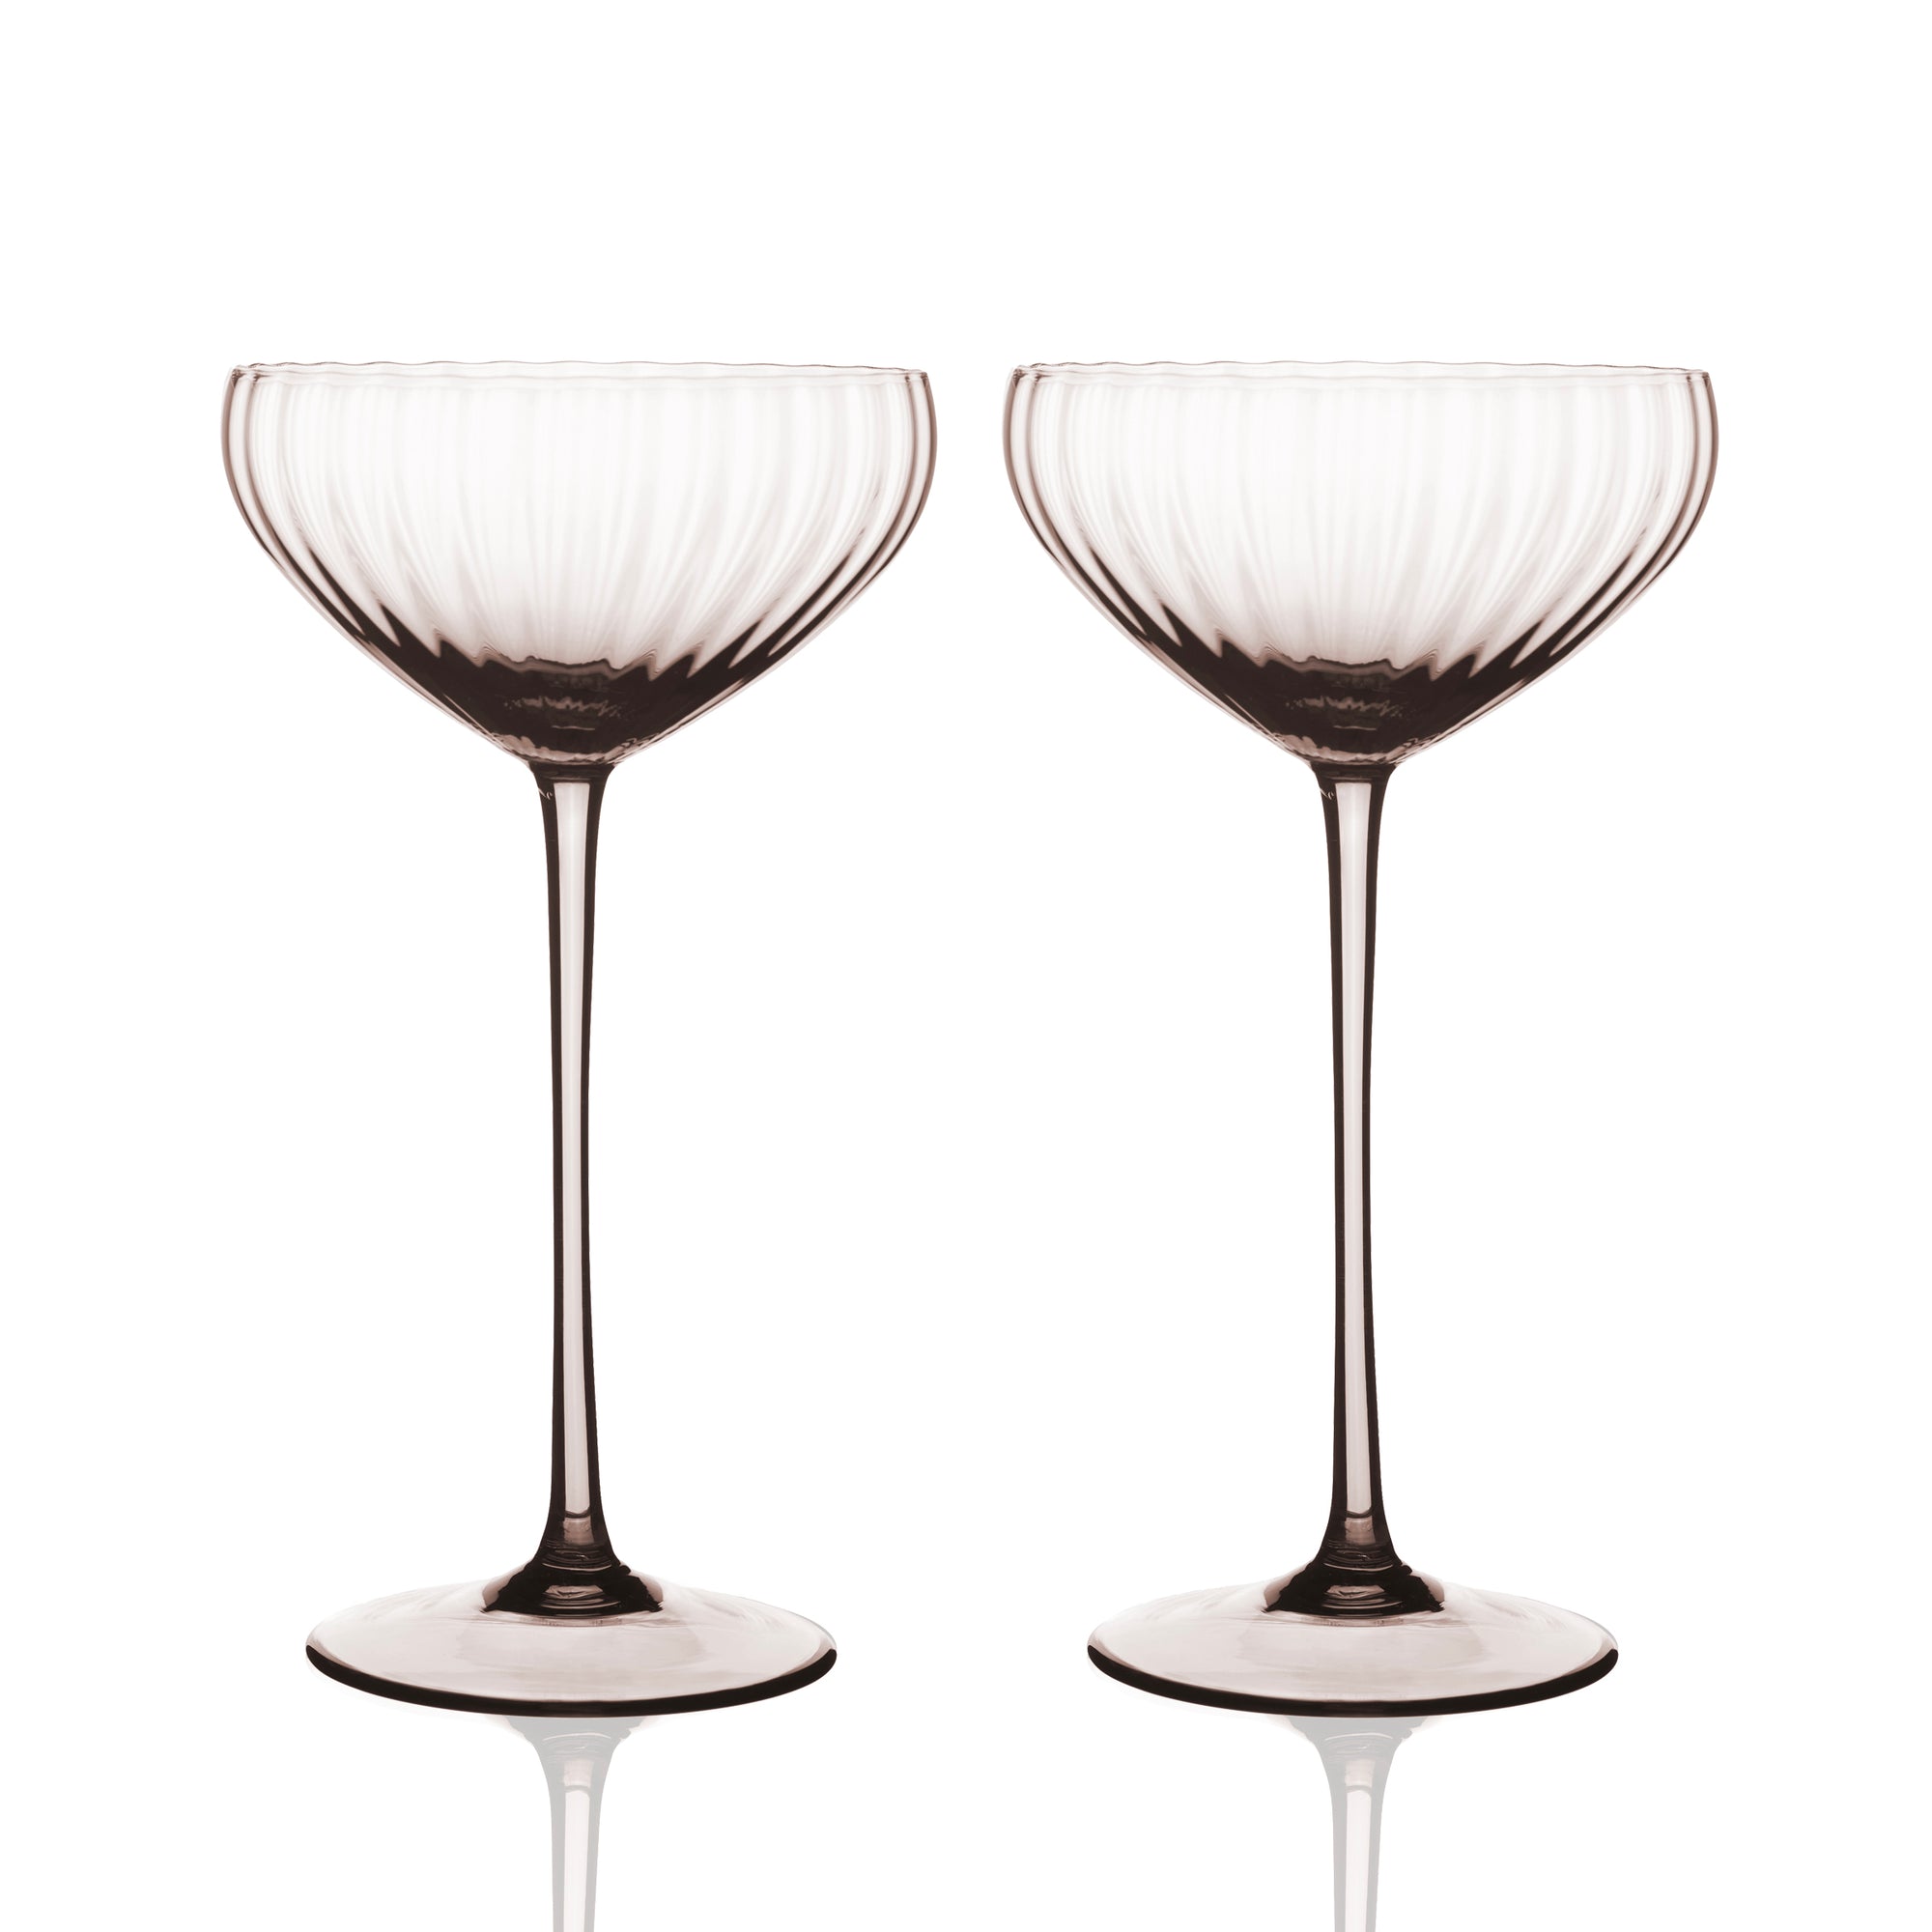 Caskata Celia Ocean & Citrine Coupe Cocktail Glasses Set of 2